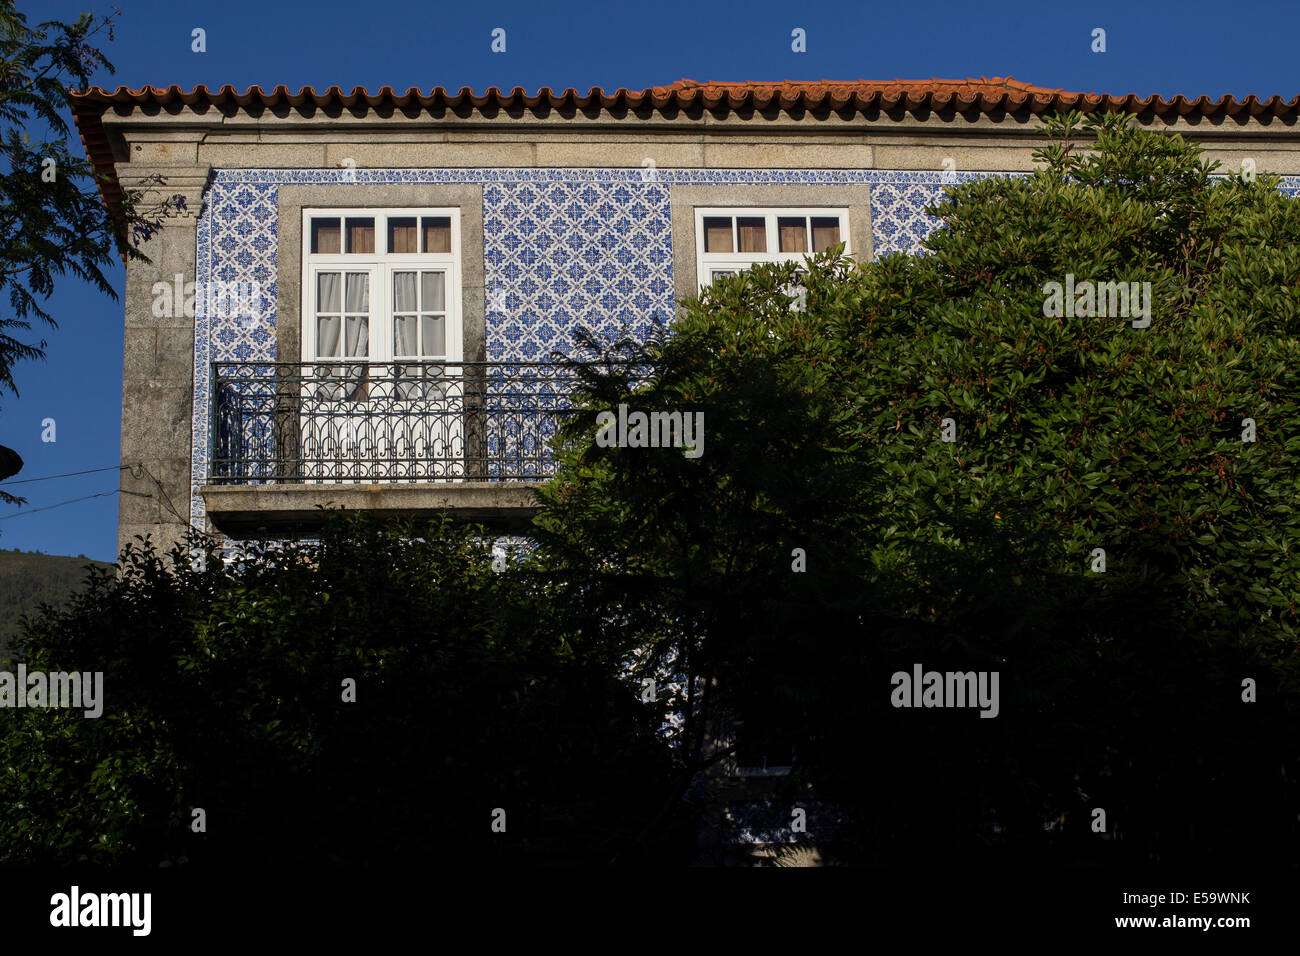 Maison typique,, façade, carrelage, Arouca, Portugal, Europe Banque D'Images